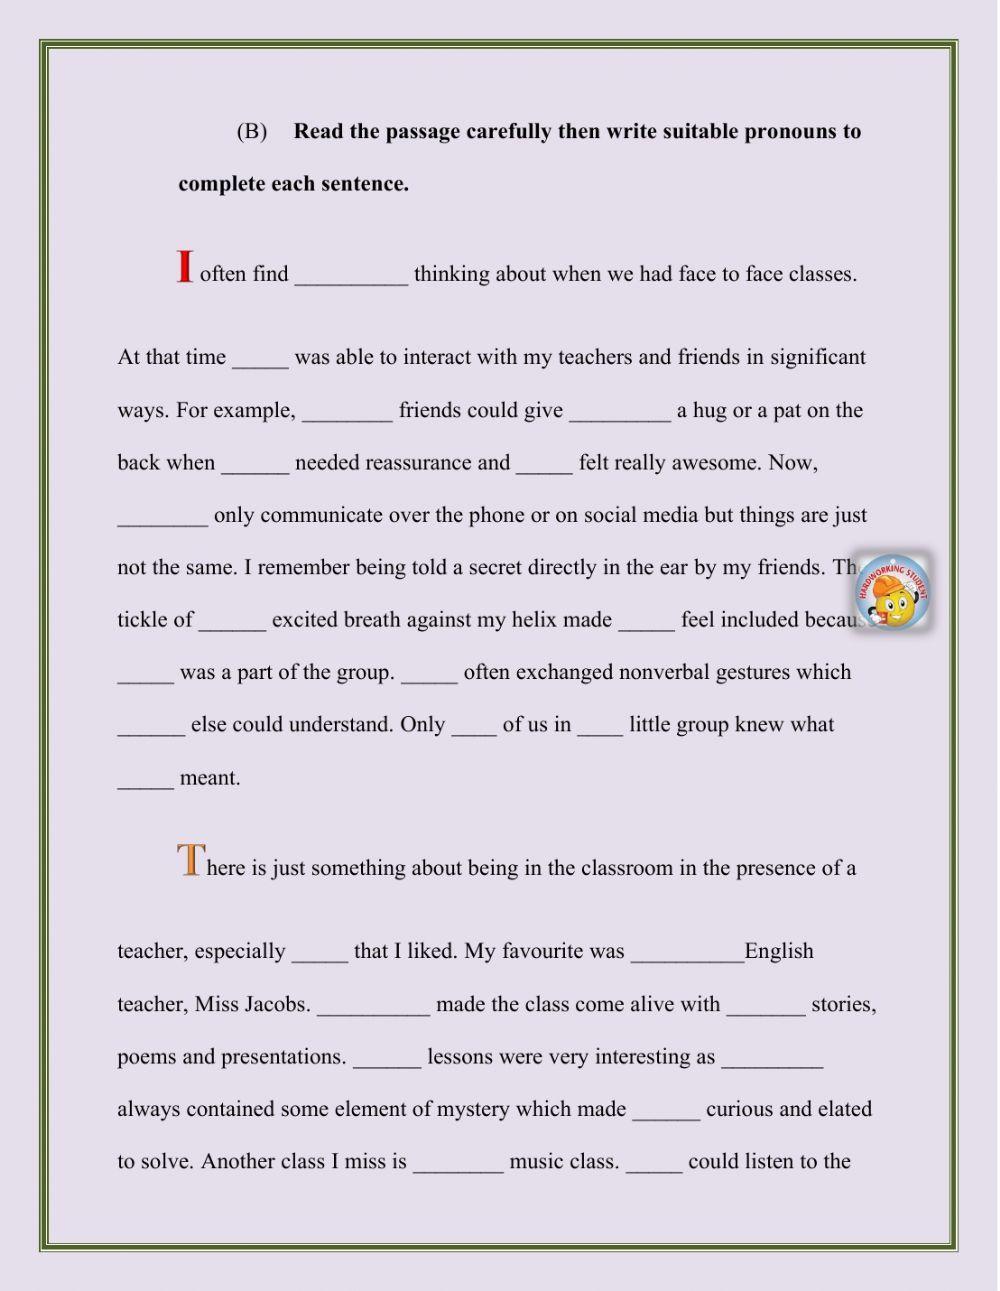 Nouns and Pronouns Worksheet